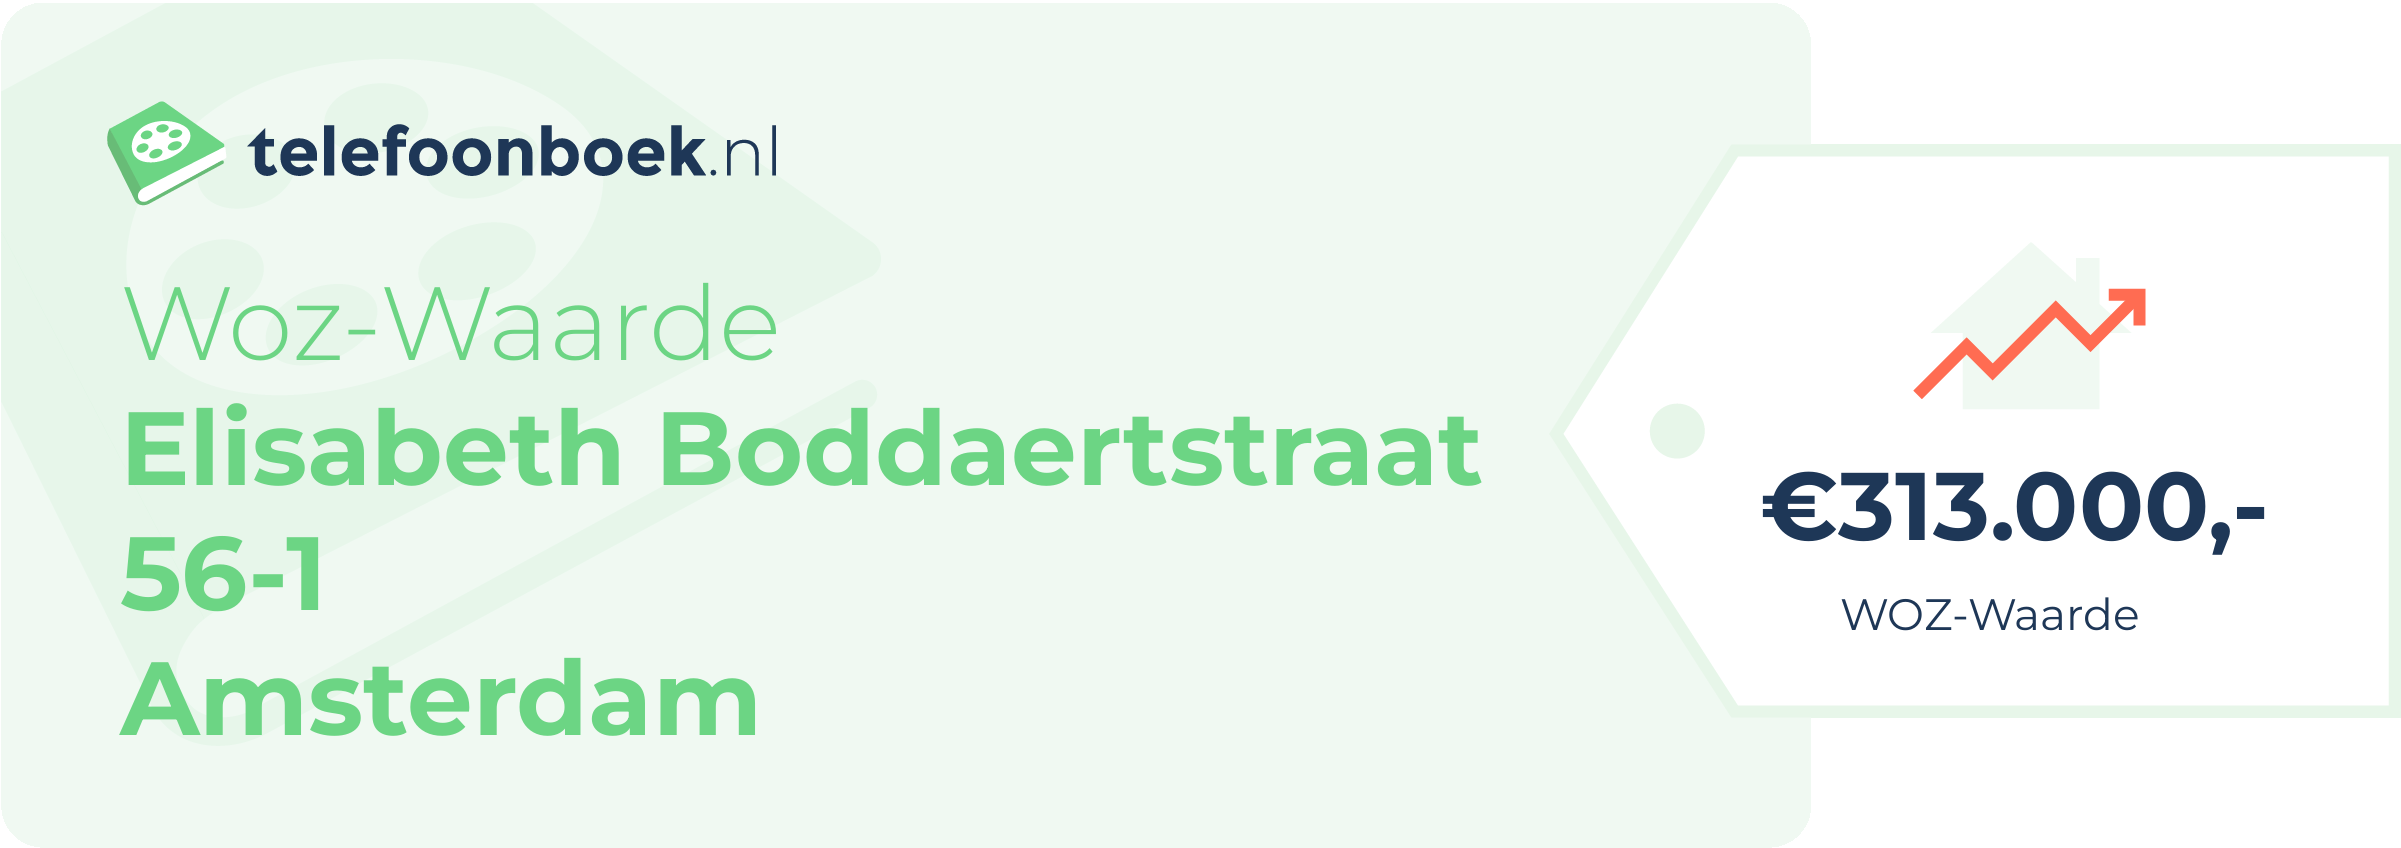 WOZ-waarde Elisabeth Boddaertstraat 56-1 Amsterdam